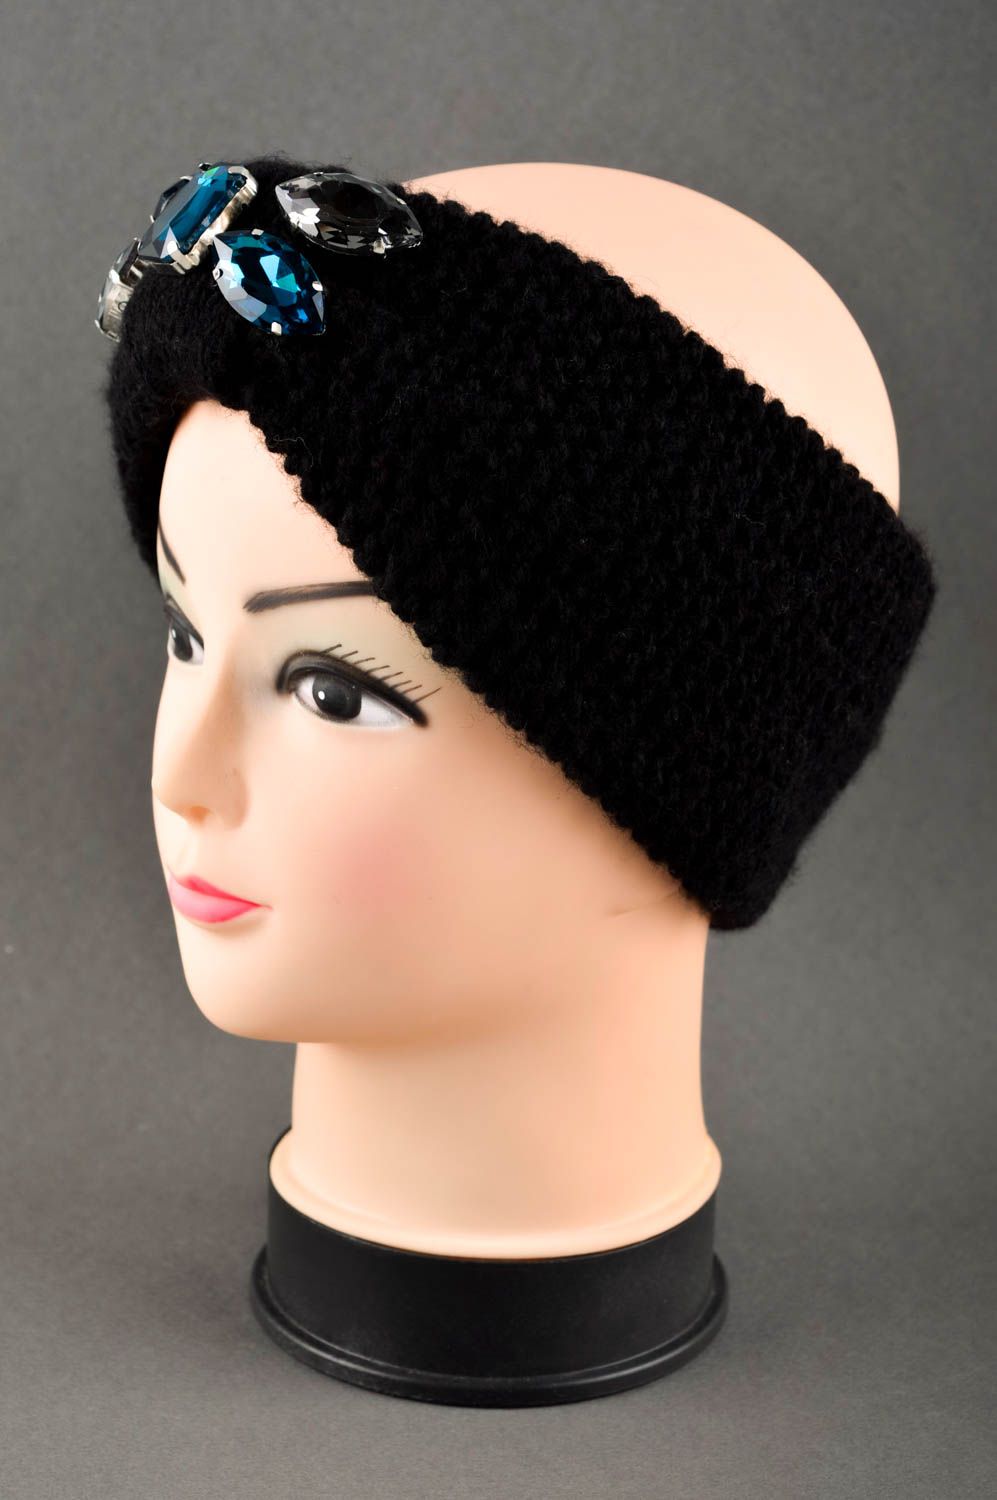 Handmade stylish turban unusual black headband knitted winter accessory photo 1